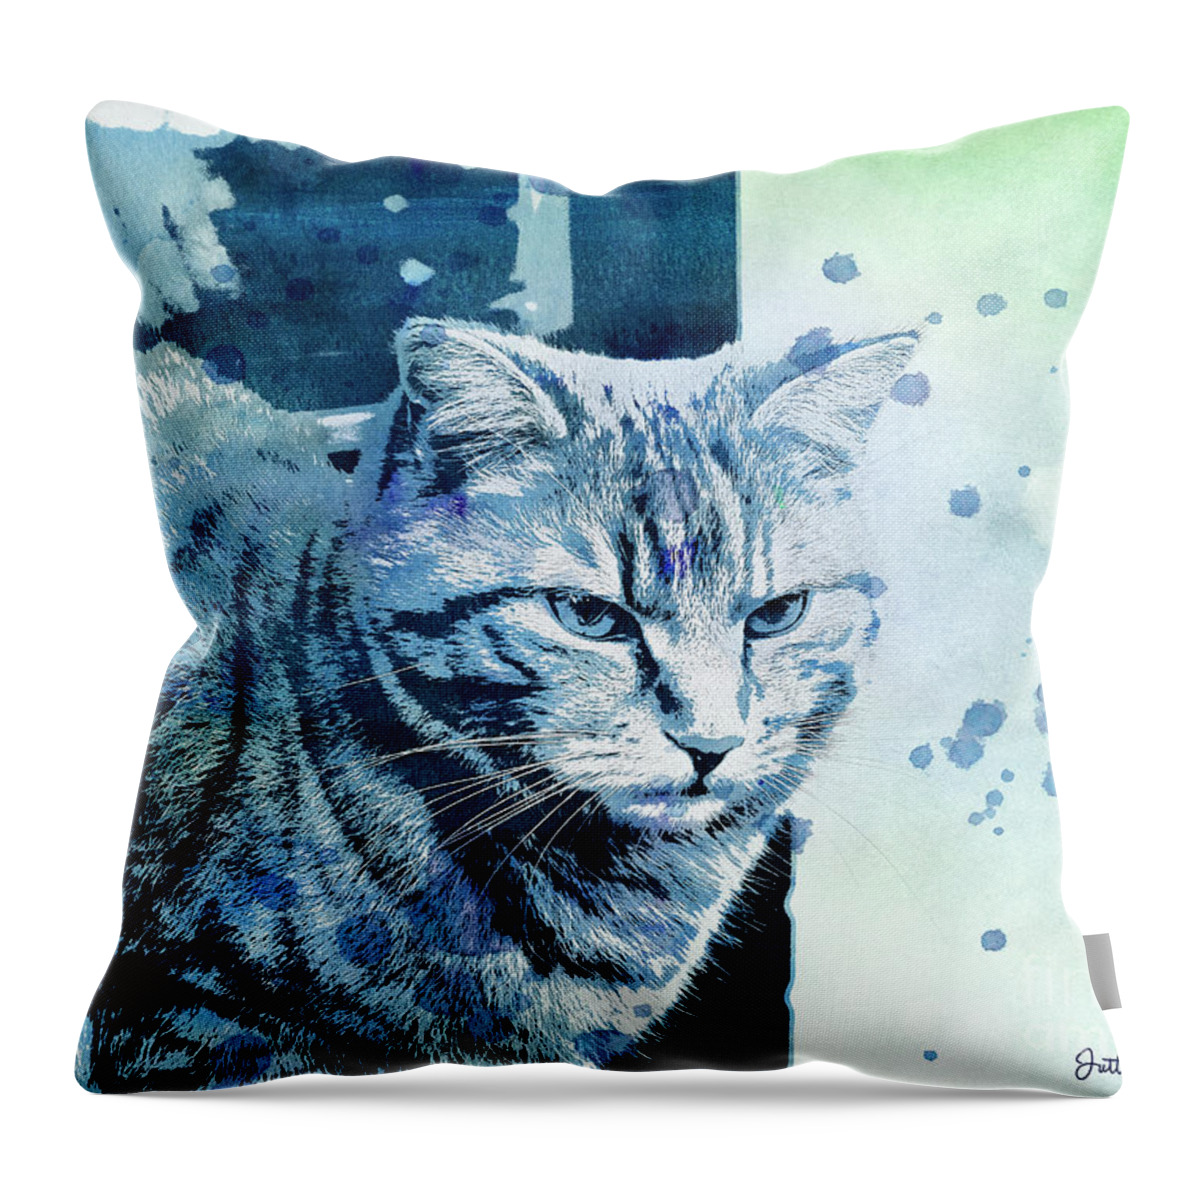 Photo Throw Pillow featuring the digital art Catbird Seat by Jutta Maria Pusl